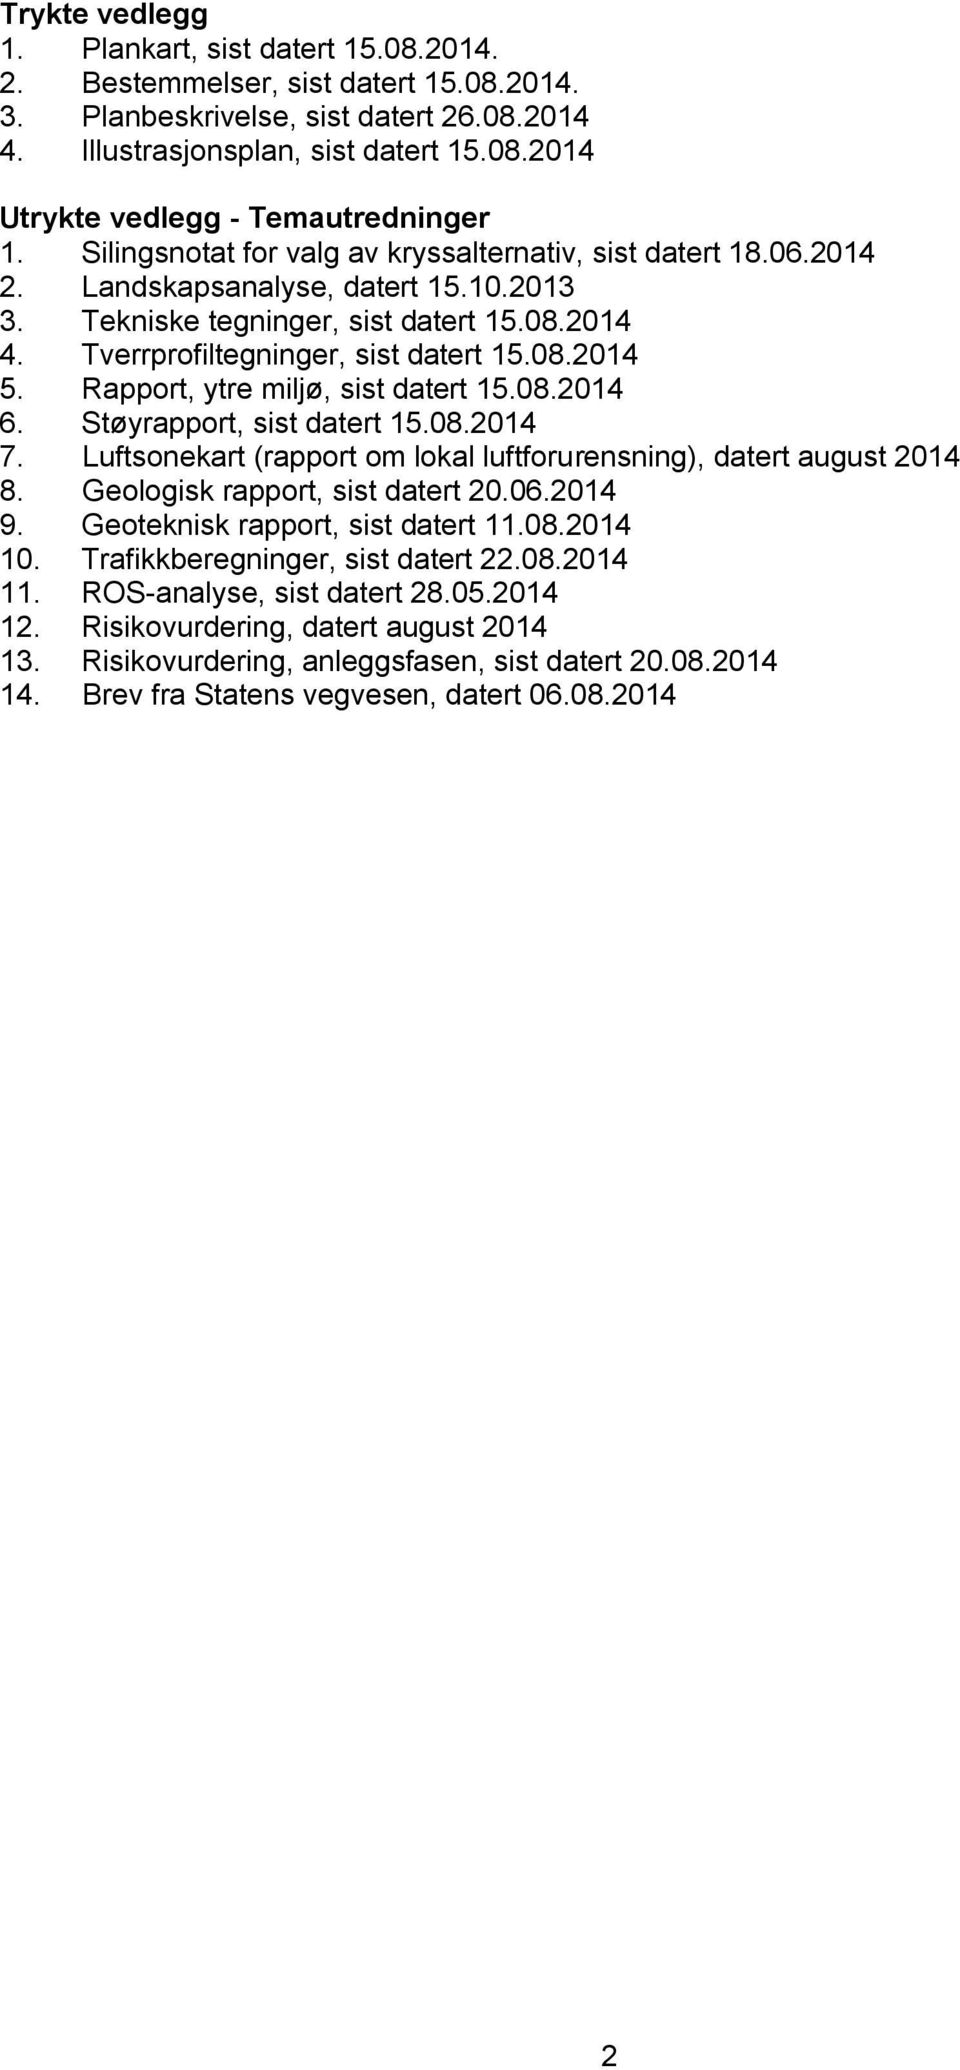 Rapport, ytre miljø, sist datert 15.08.2014 6. Støyrapport, sist datert 15.08.2014 7. Luftsonekart (rapport om lokal luftforurensning), datert august 2014 8. Geologisk rapport, sist datert 20.06.